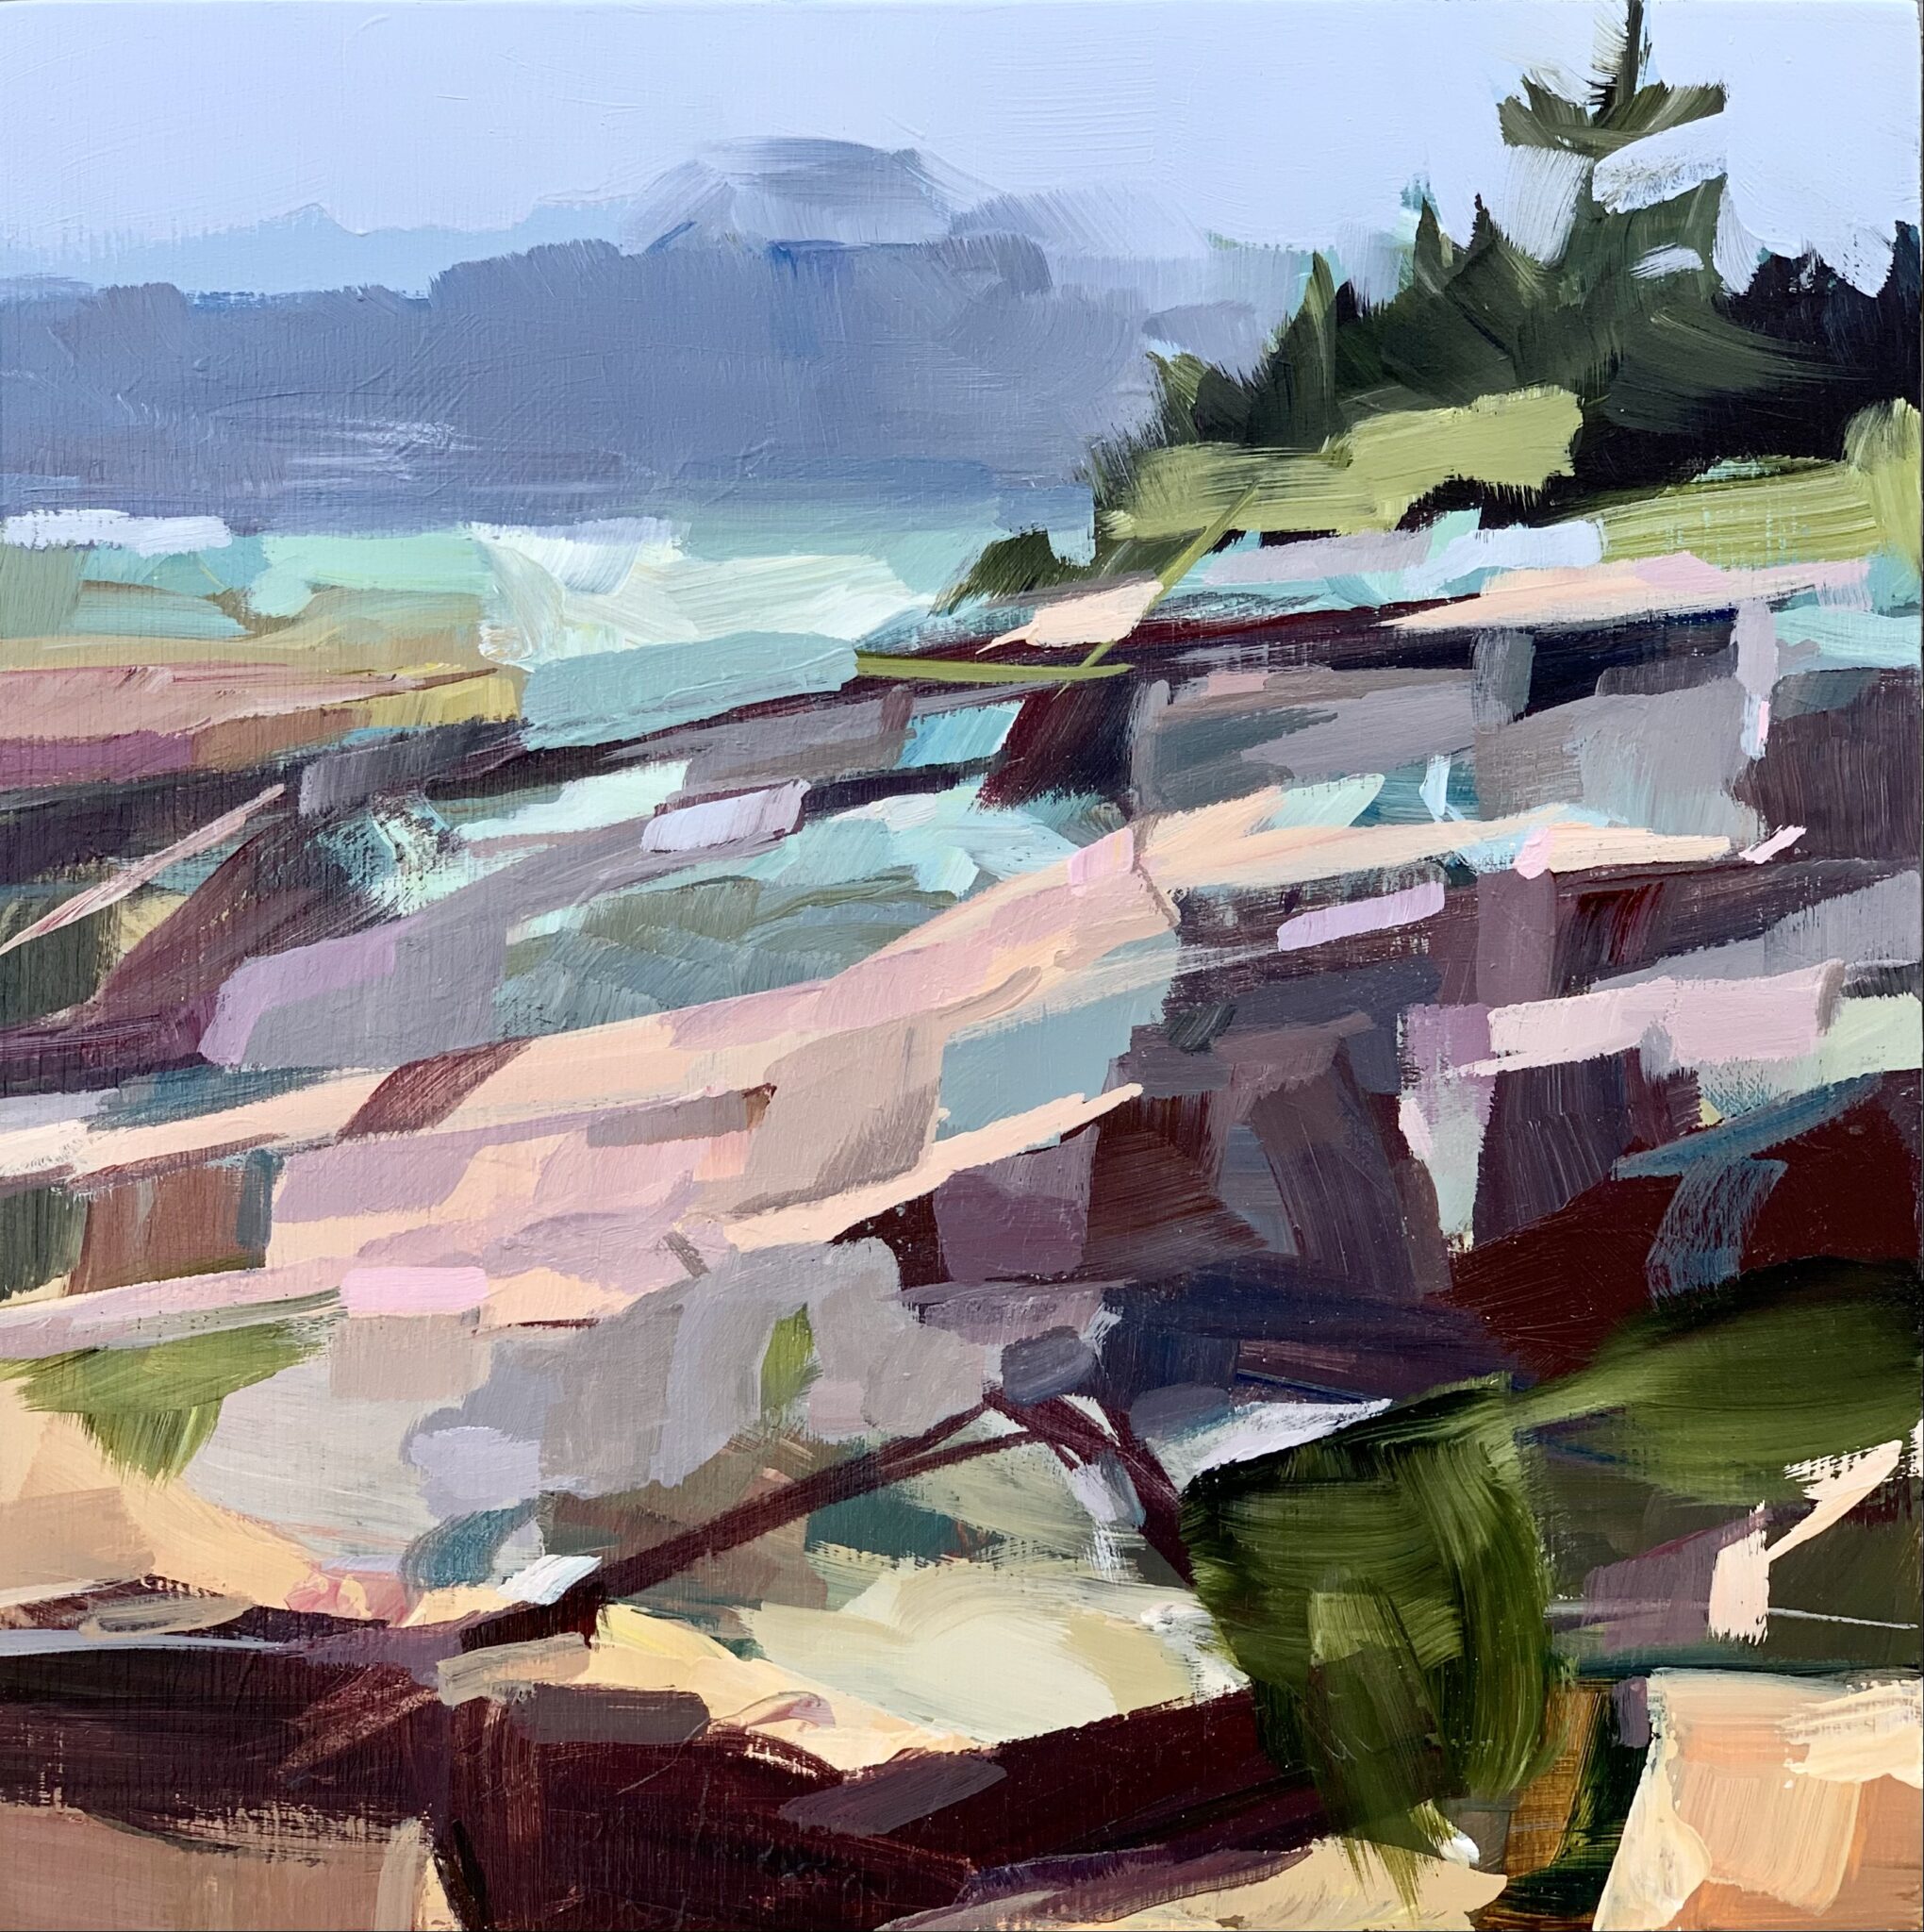 Painting by Liz Prescott of the Maine coastline.